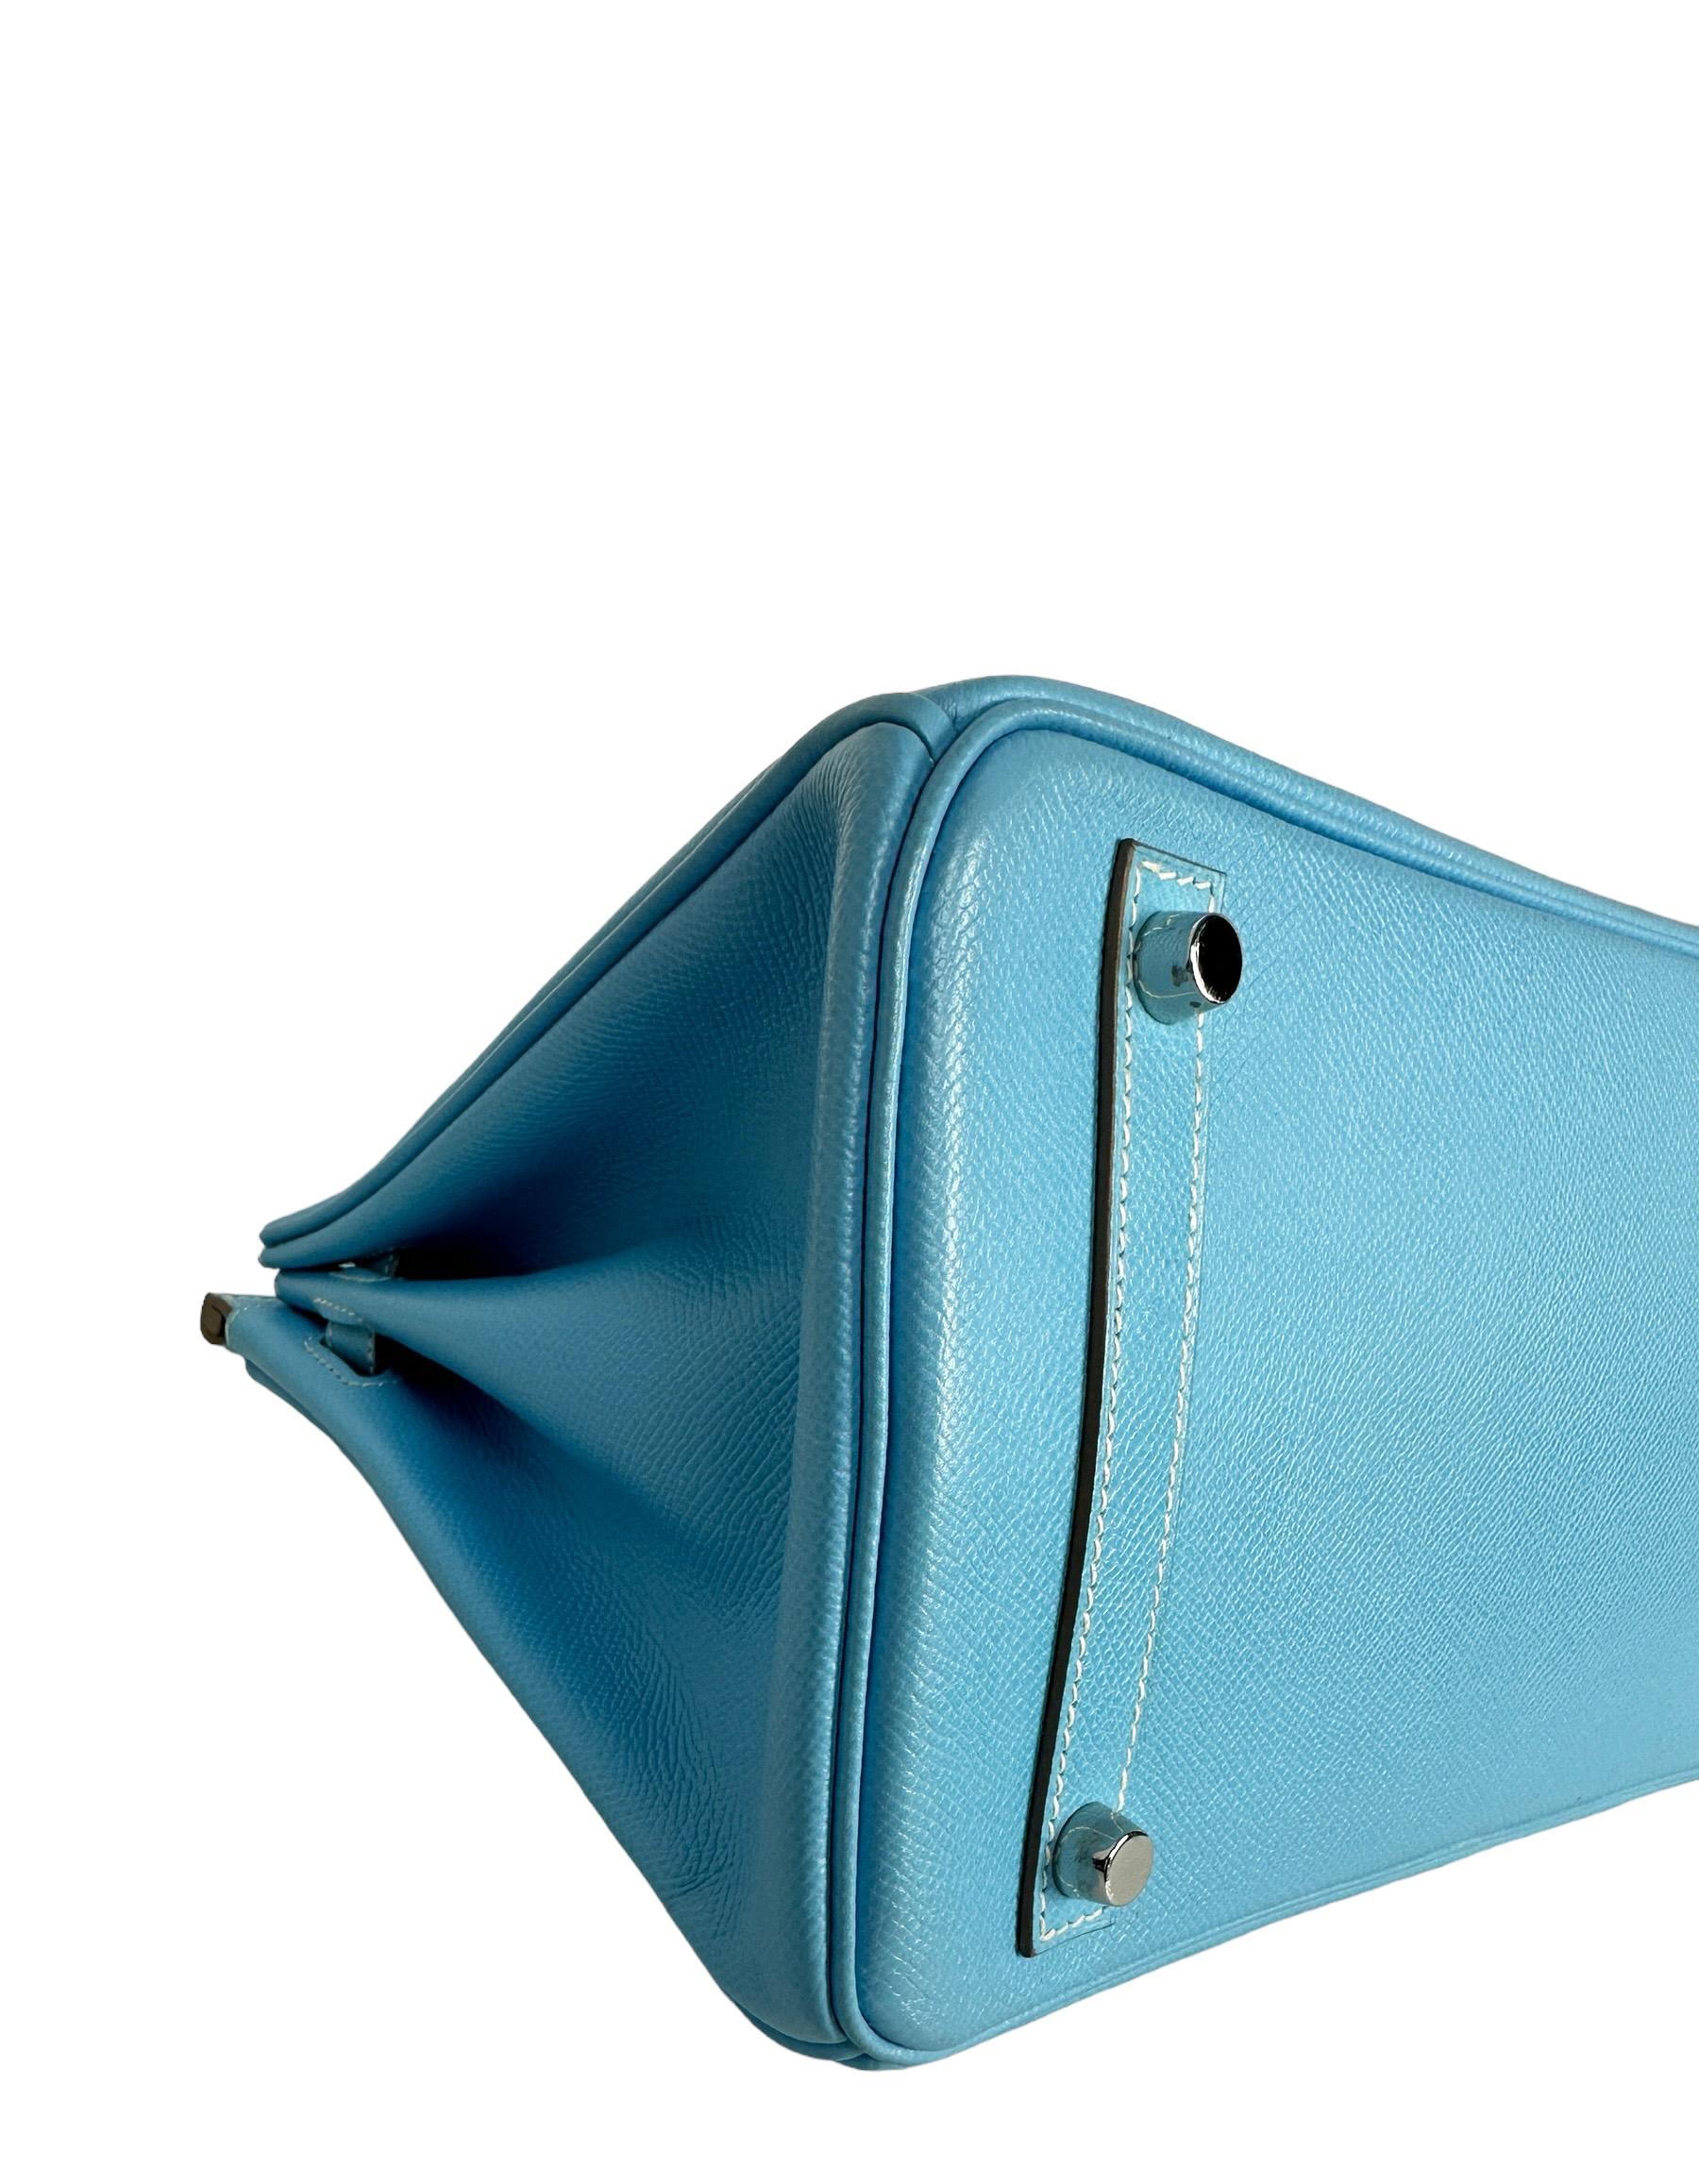 Hermes Bleu Celeste/ Mykonos Epsom Leather Candy Birkin Bag 30cm PHW 1